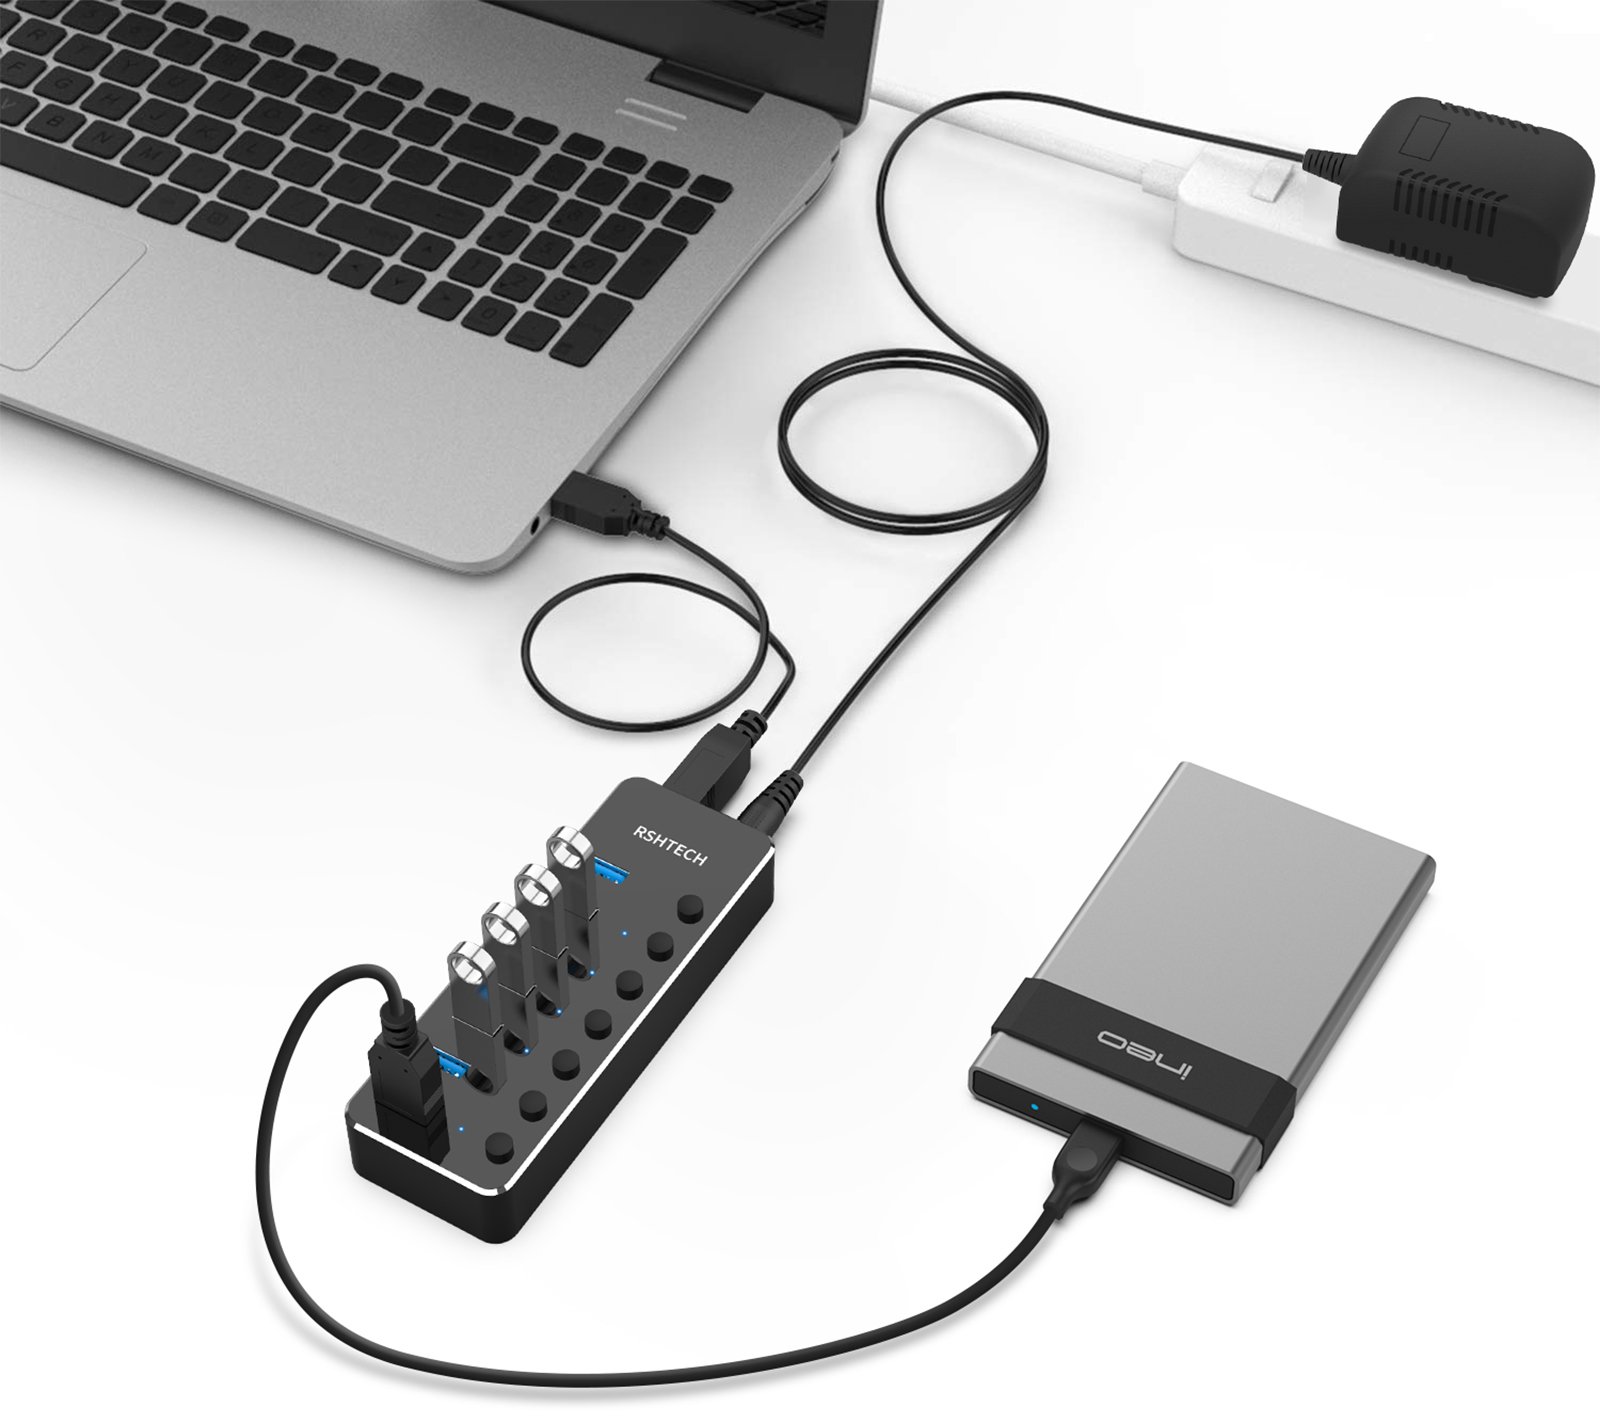 Hub USB Alimenté, RSHTECH Hub USB 3.2/USB C à 7 Ports avec 3*10Gbps Data  Ports (USB-A, 2*USB-C), 4*5Gbps USB 3.0 Ports, Touch Switch, 2-in-1 Data